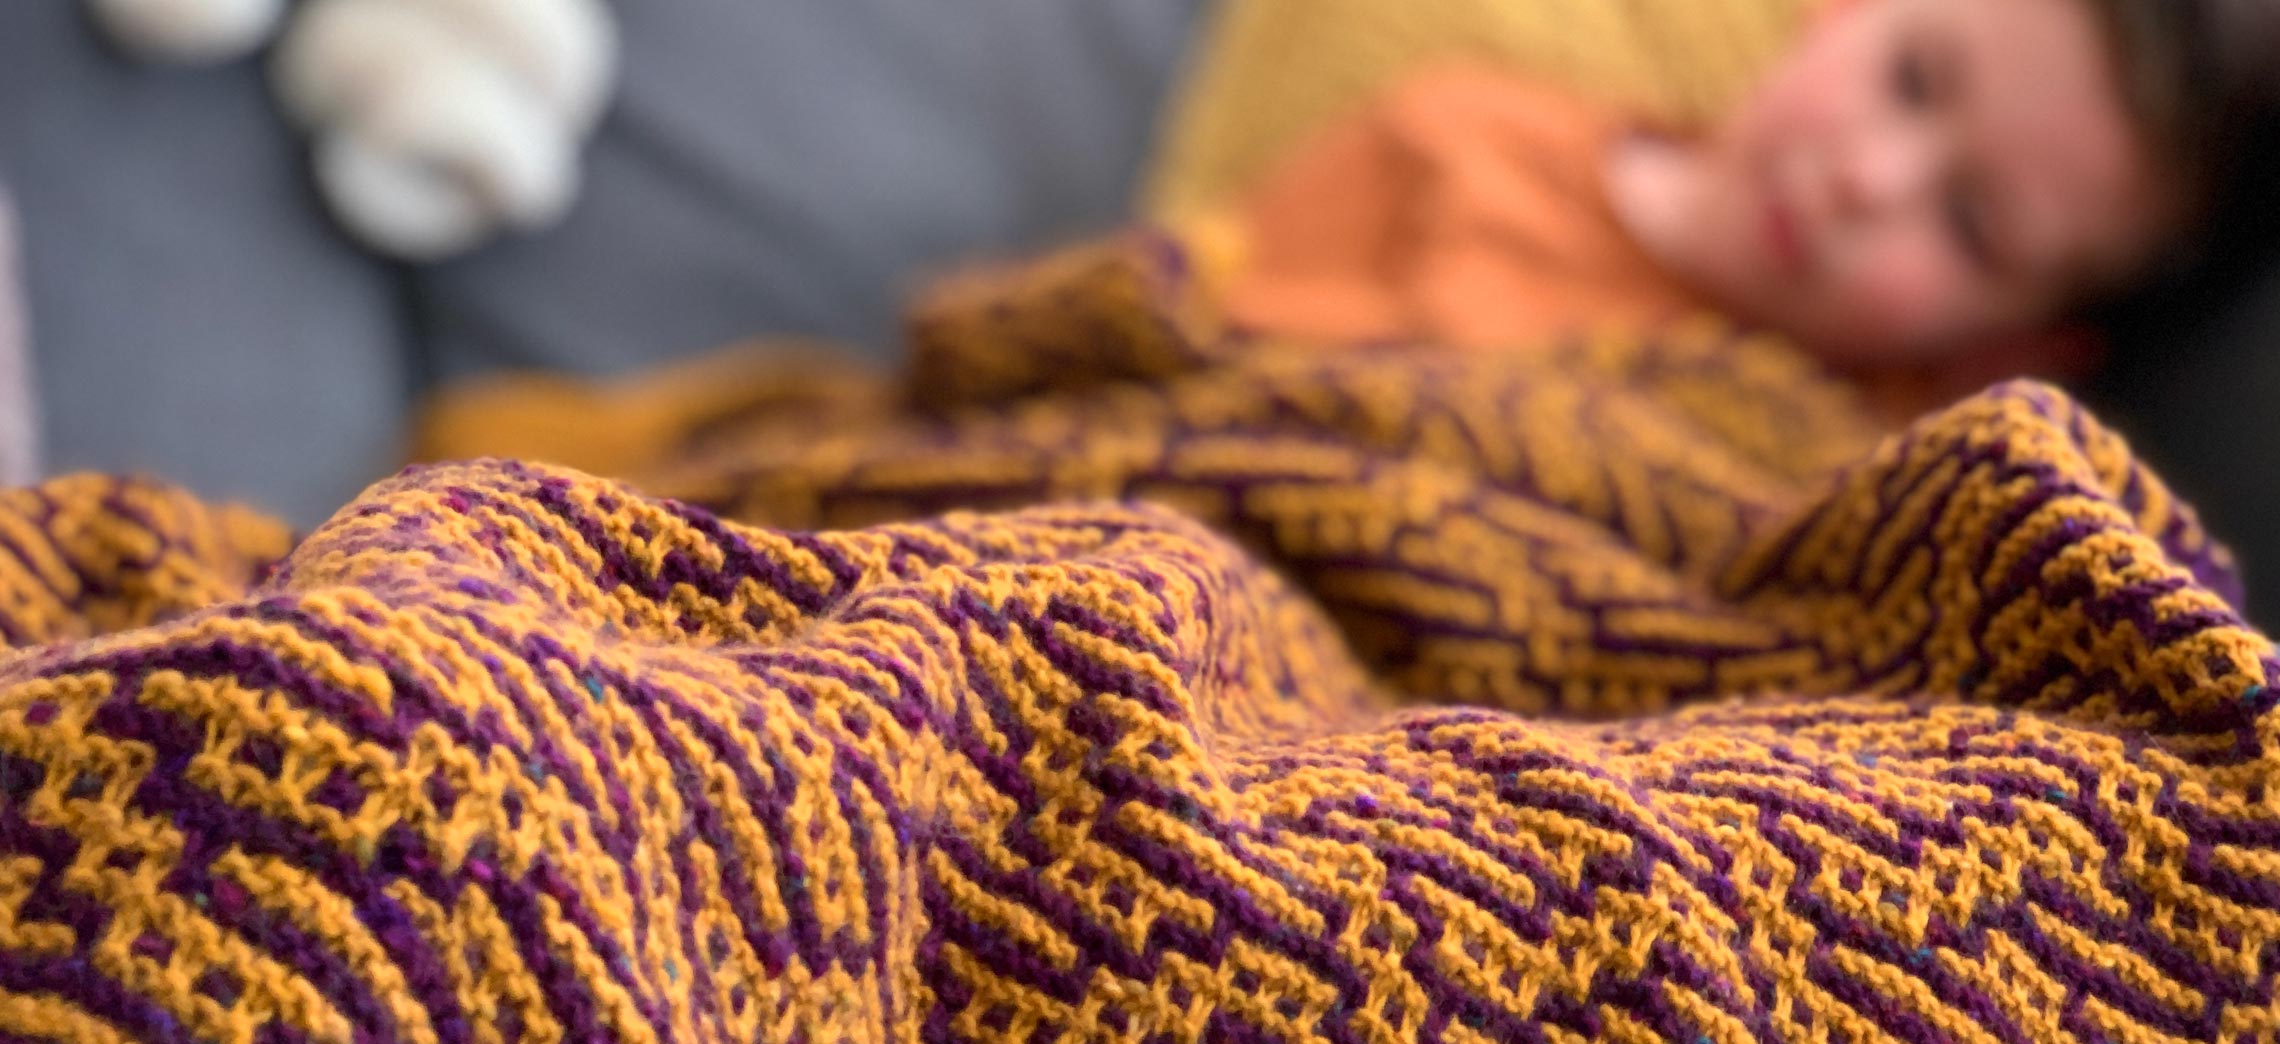 Malia Mosaic Knitted Blanket: New Pattern Release